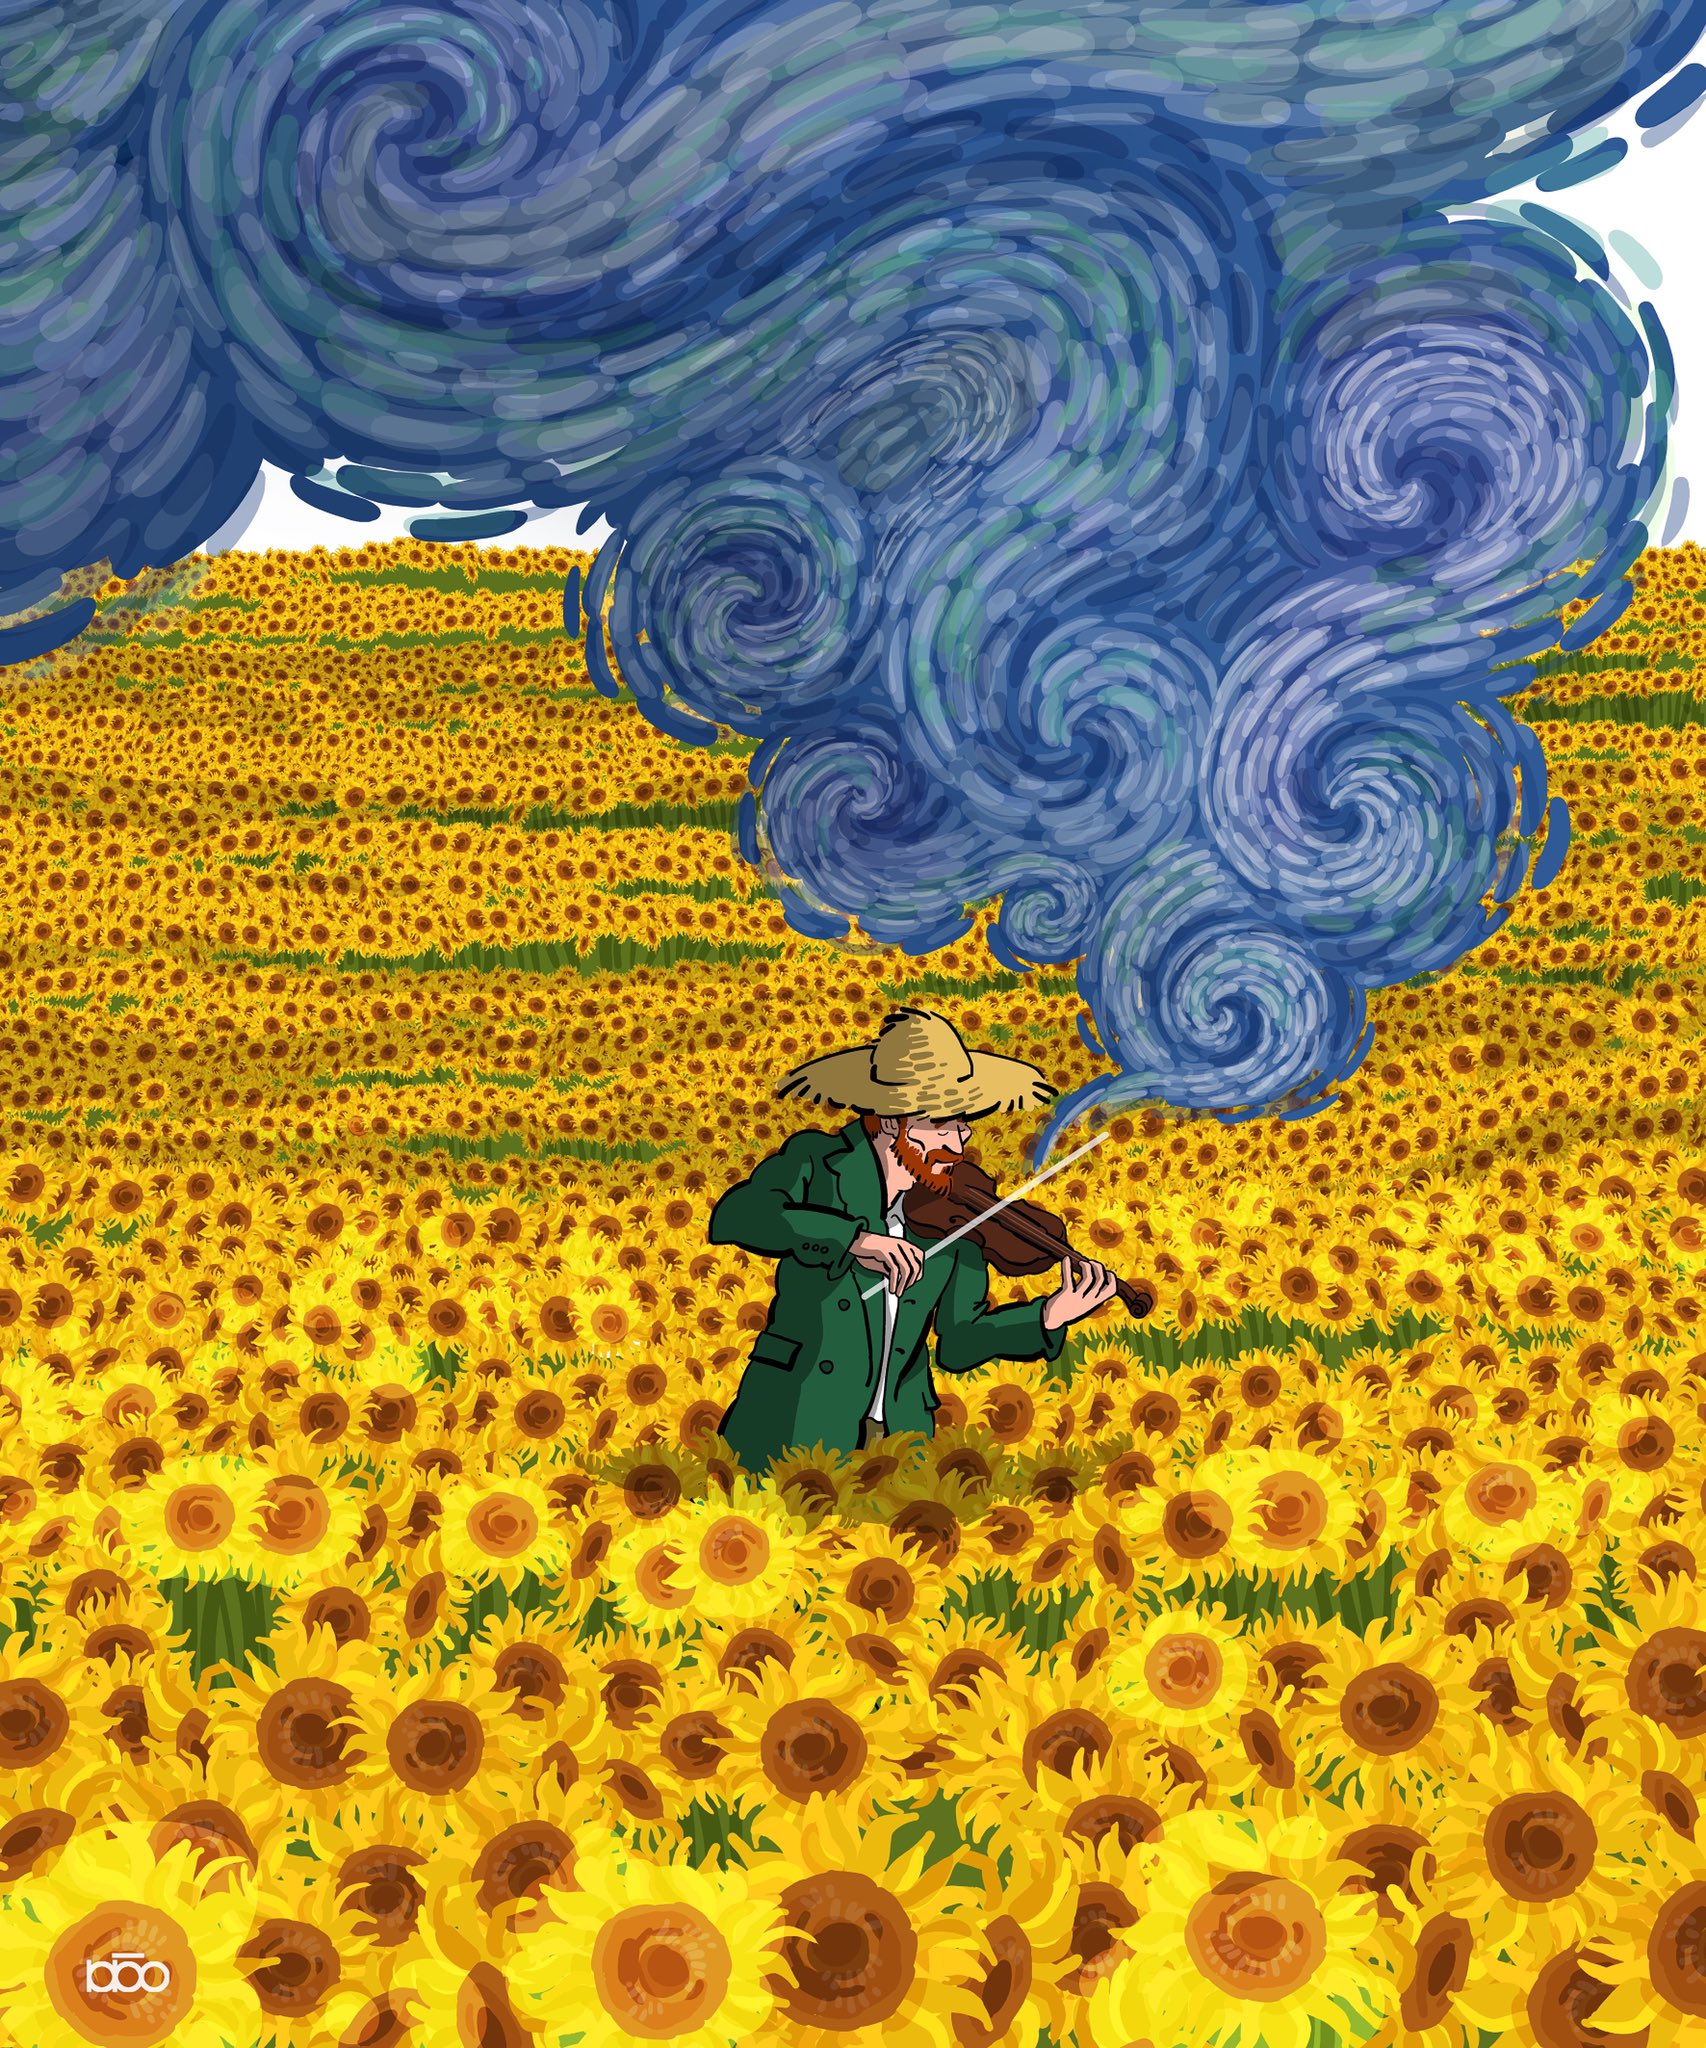 ALIREZA KARIMI MOGHADDAM on Twitter: "#vangogh #sunflowers